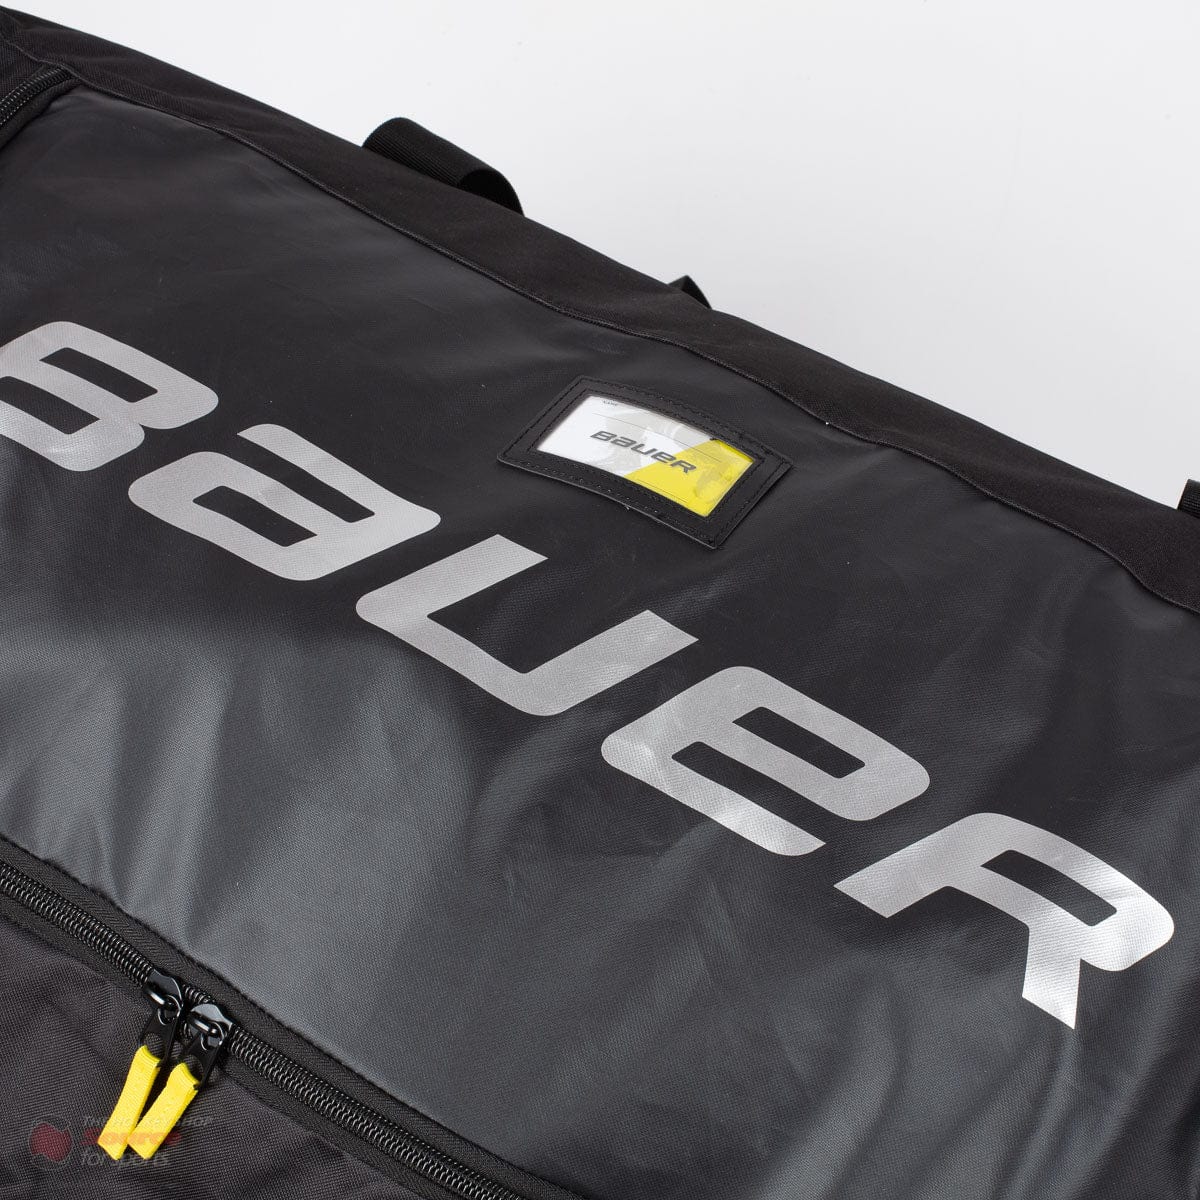 Bauer Premium Junior Wheel Hockey Bag (2019)